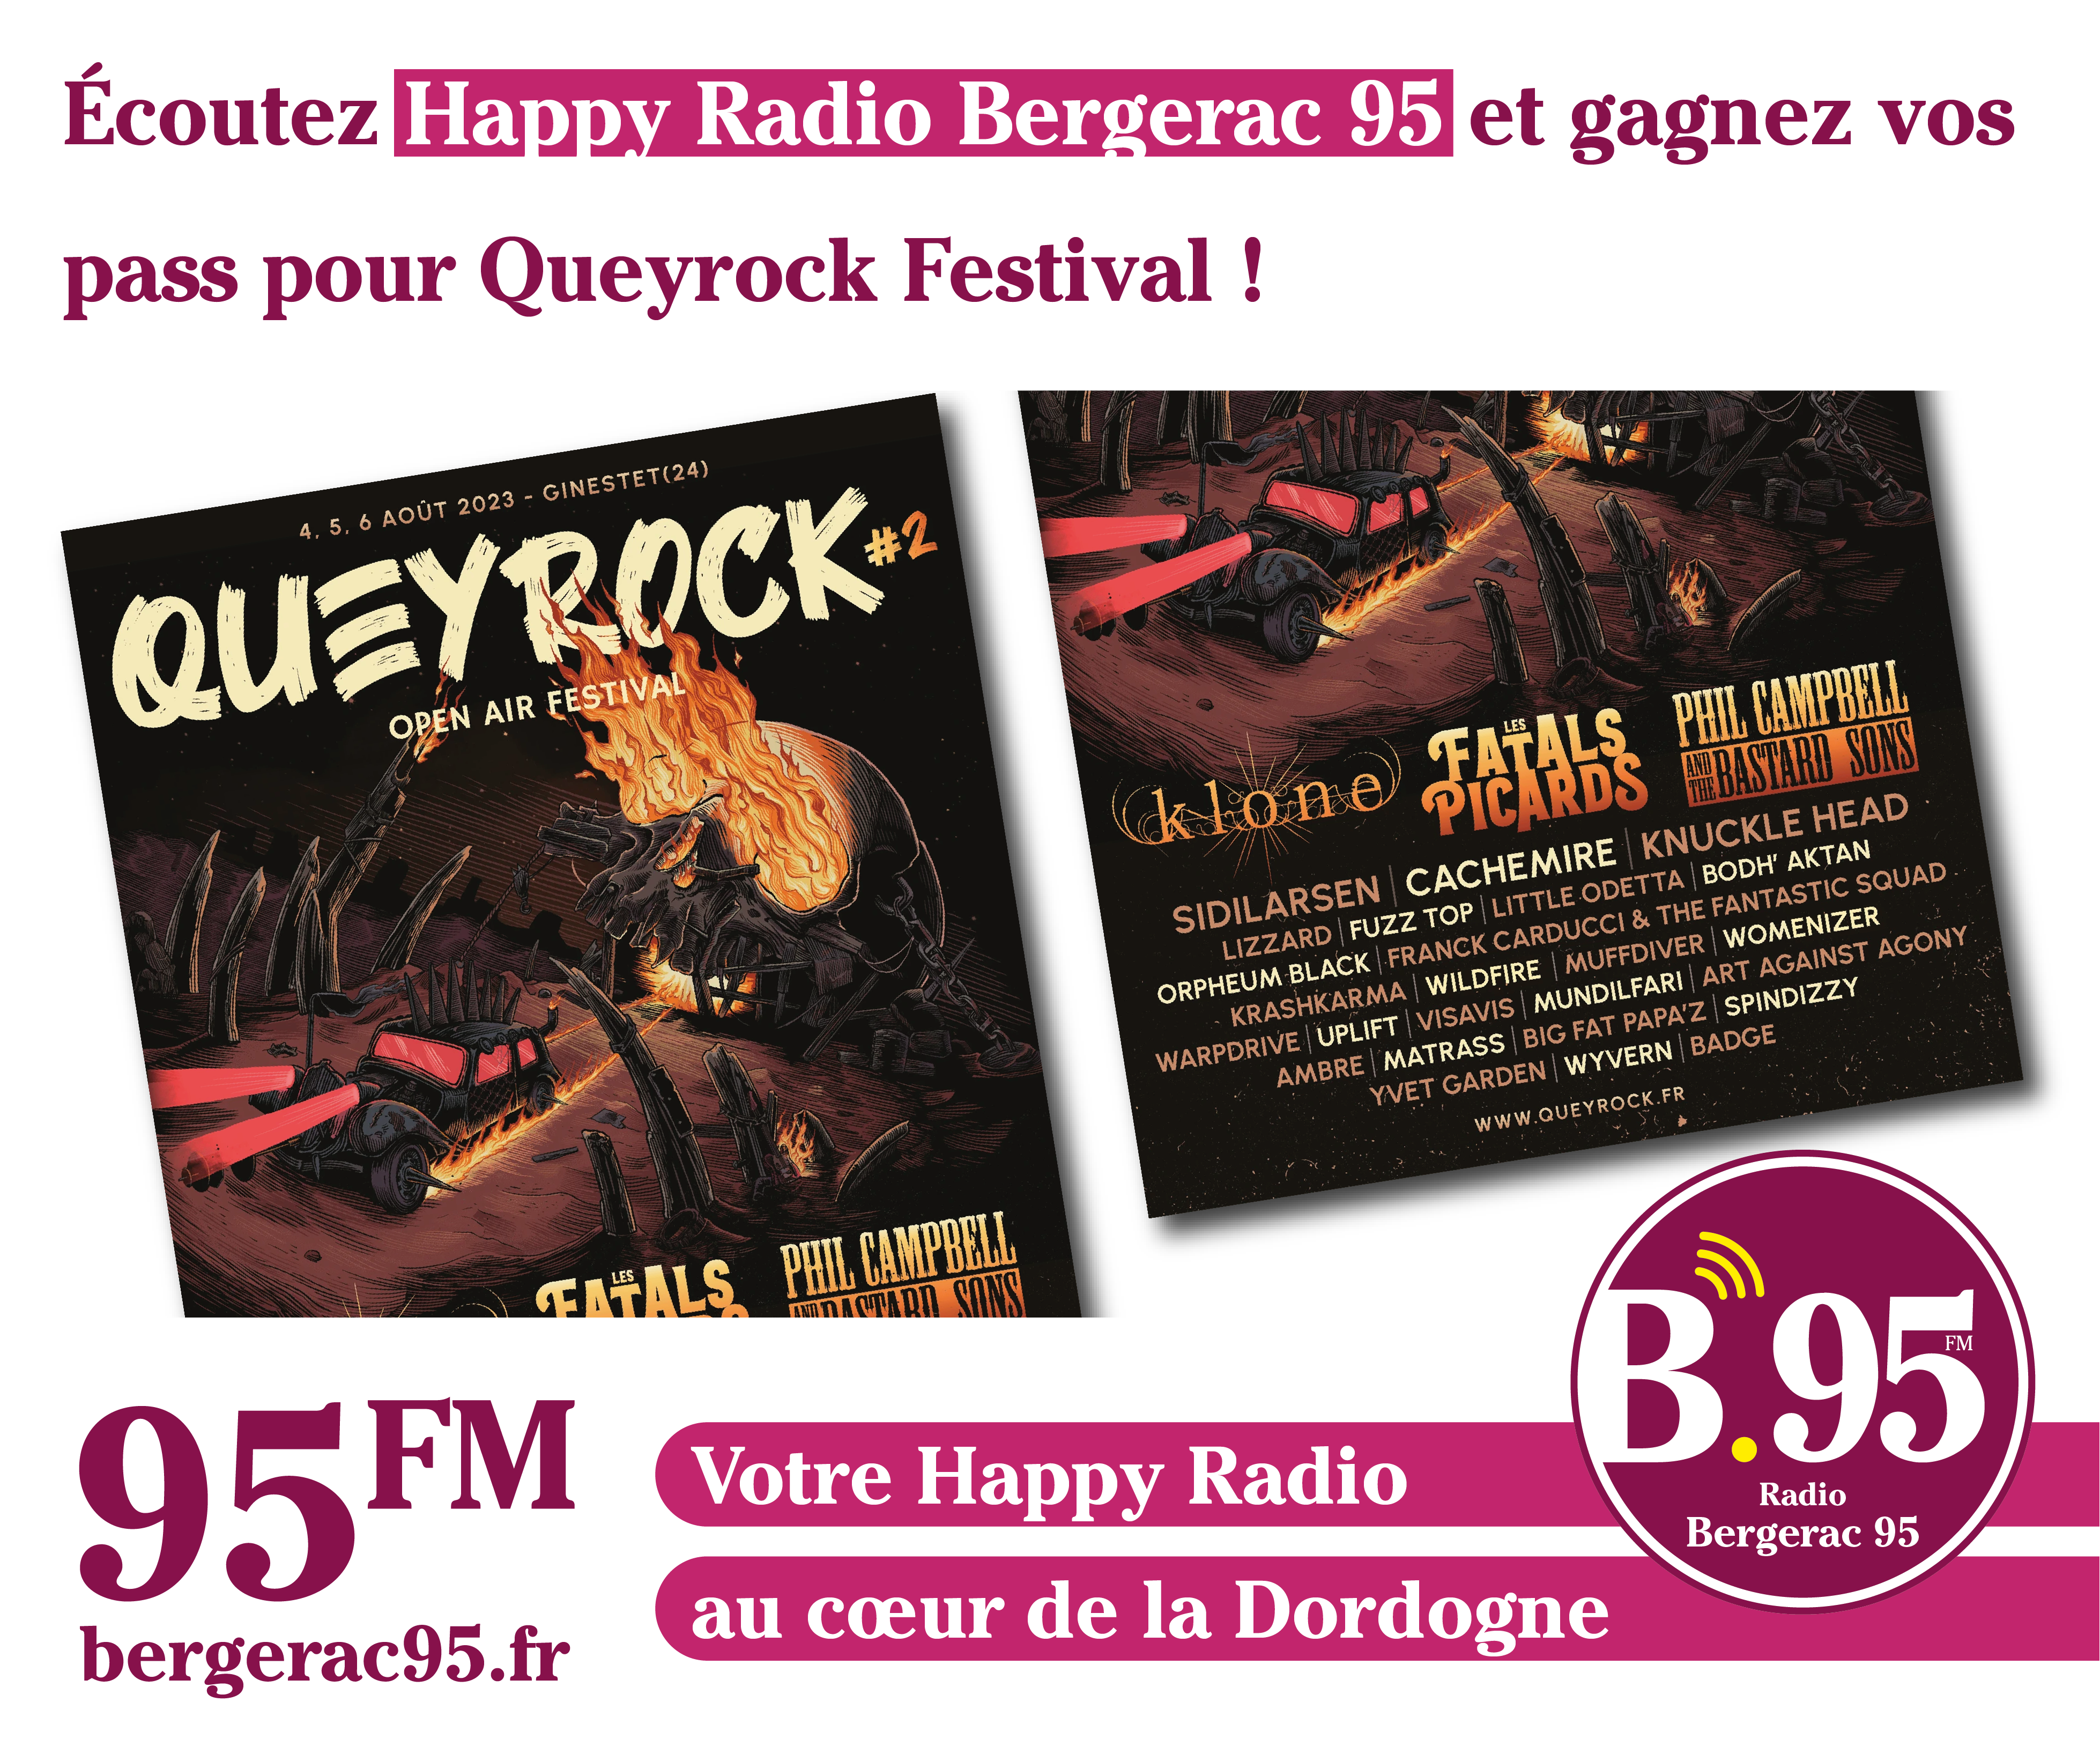 You are currently viewing Écoutez Happy Radio Bergerac 95 et gagnez vos pass pour Queyrock Festival !